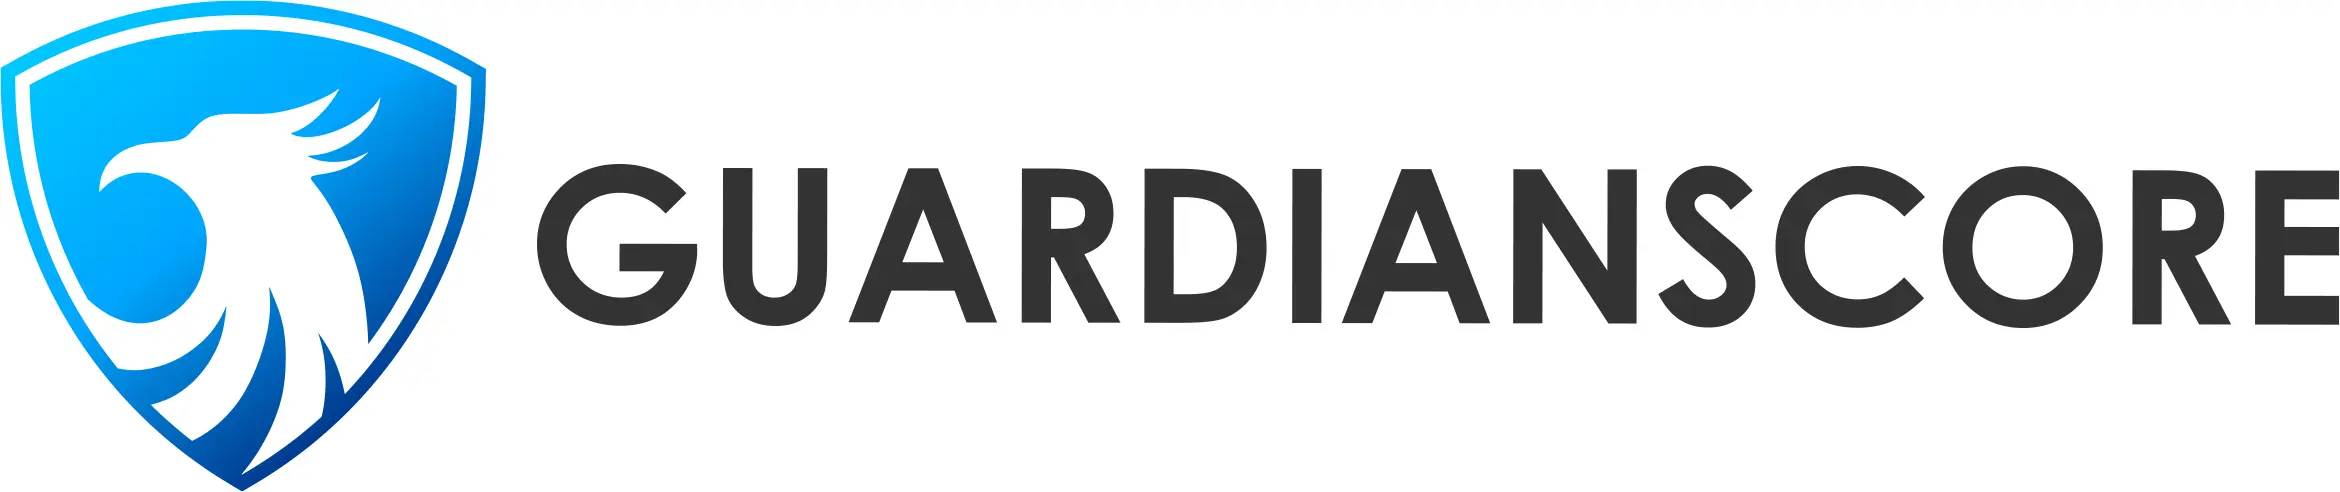 Guardian Score Logo - White Background